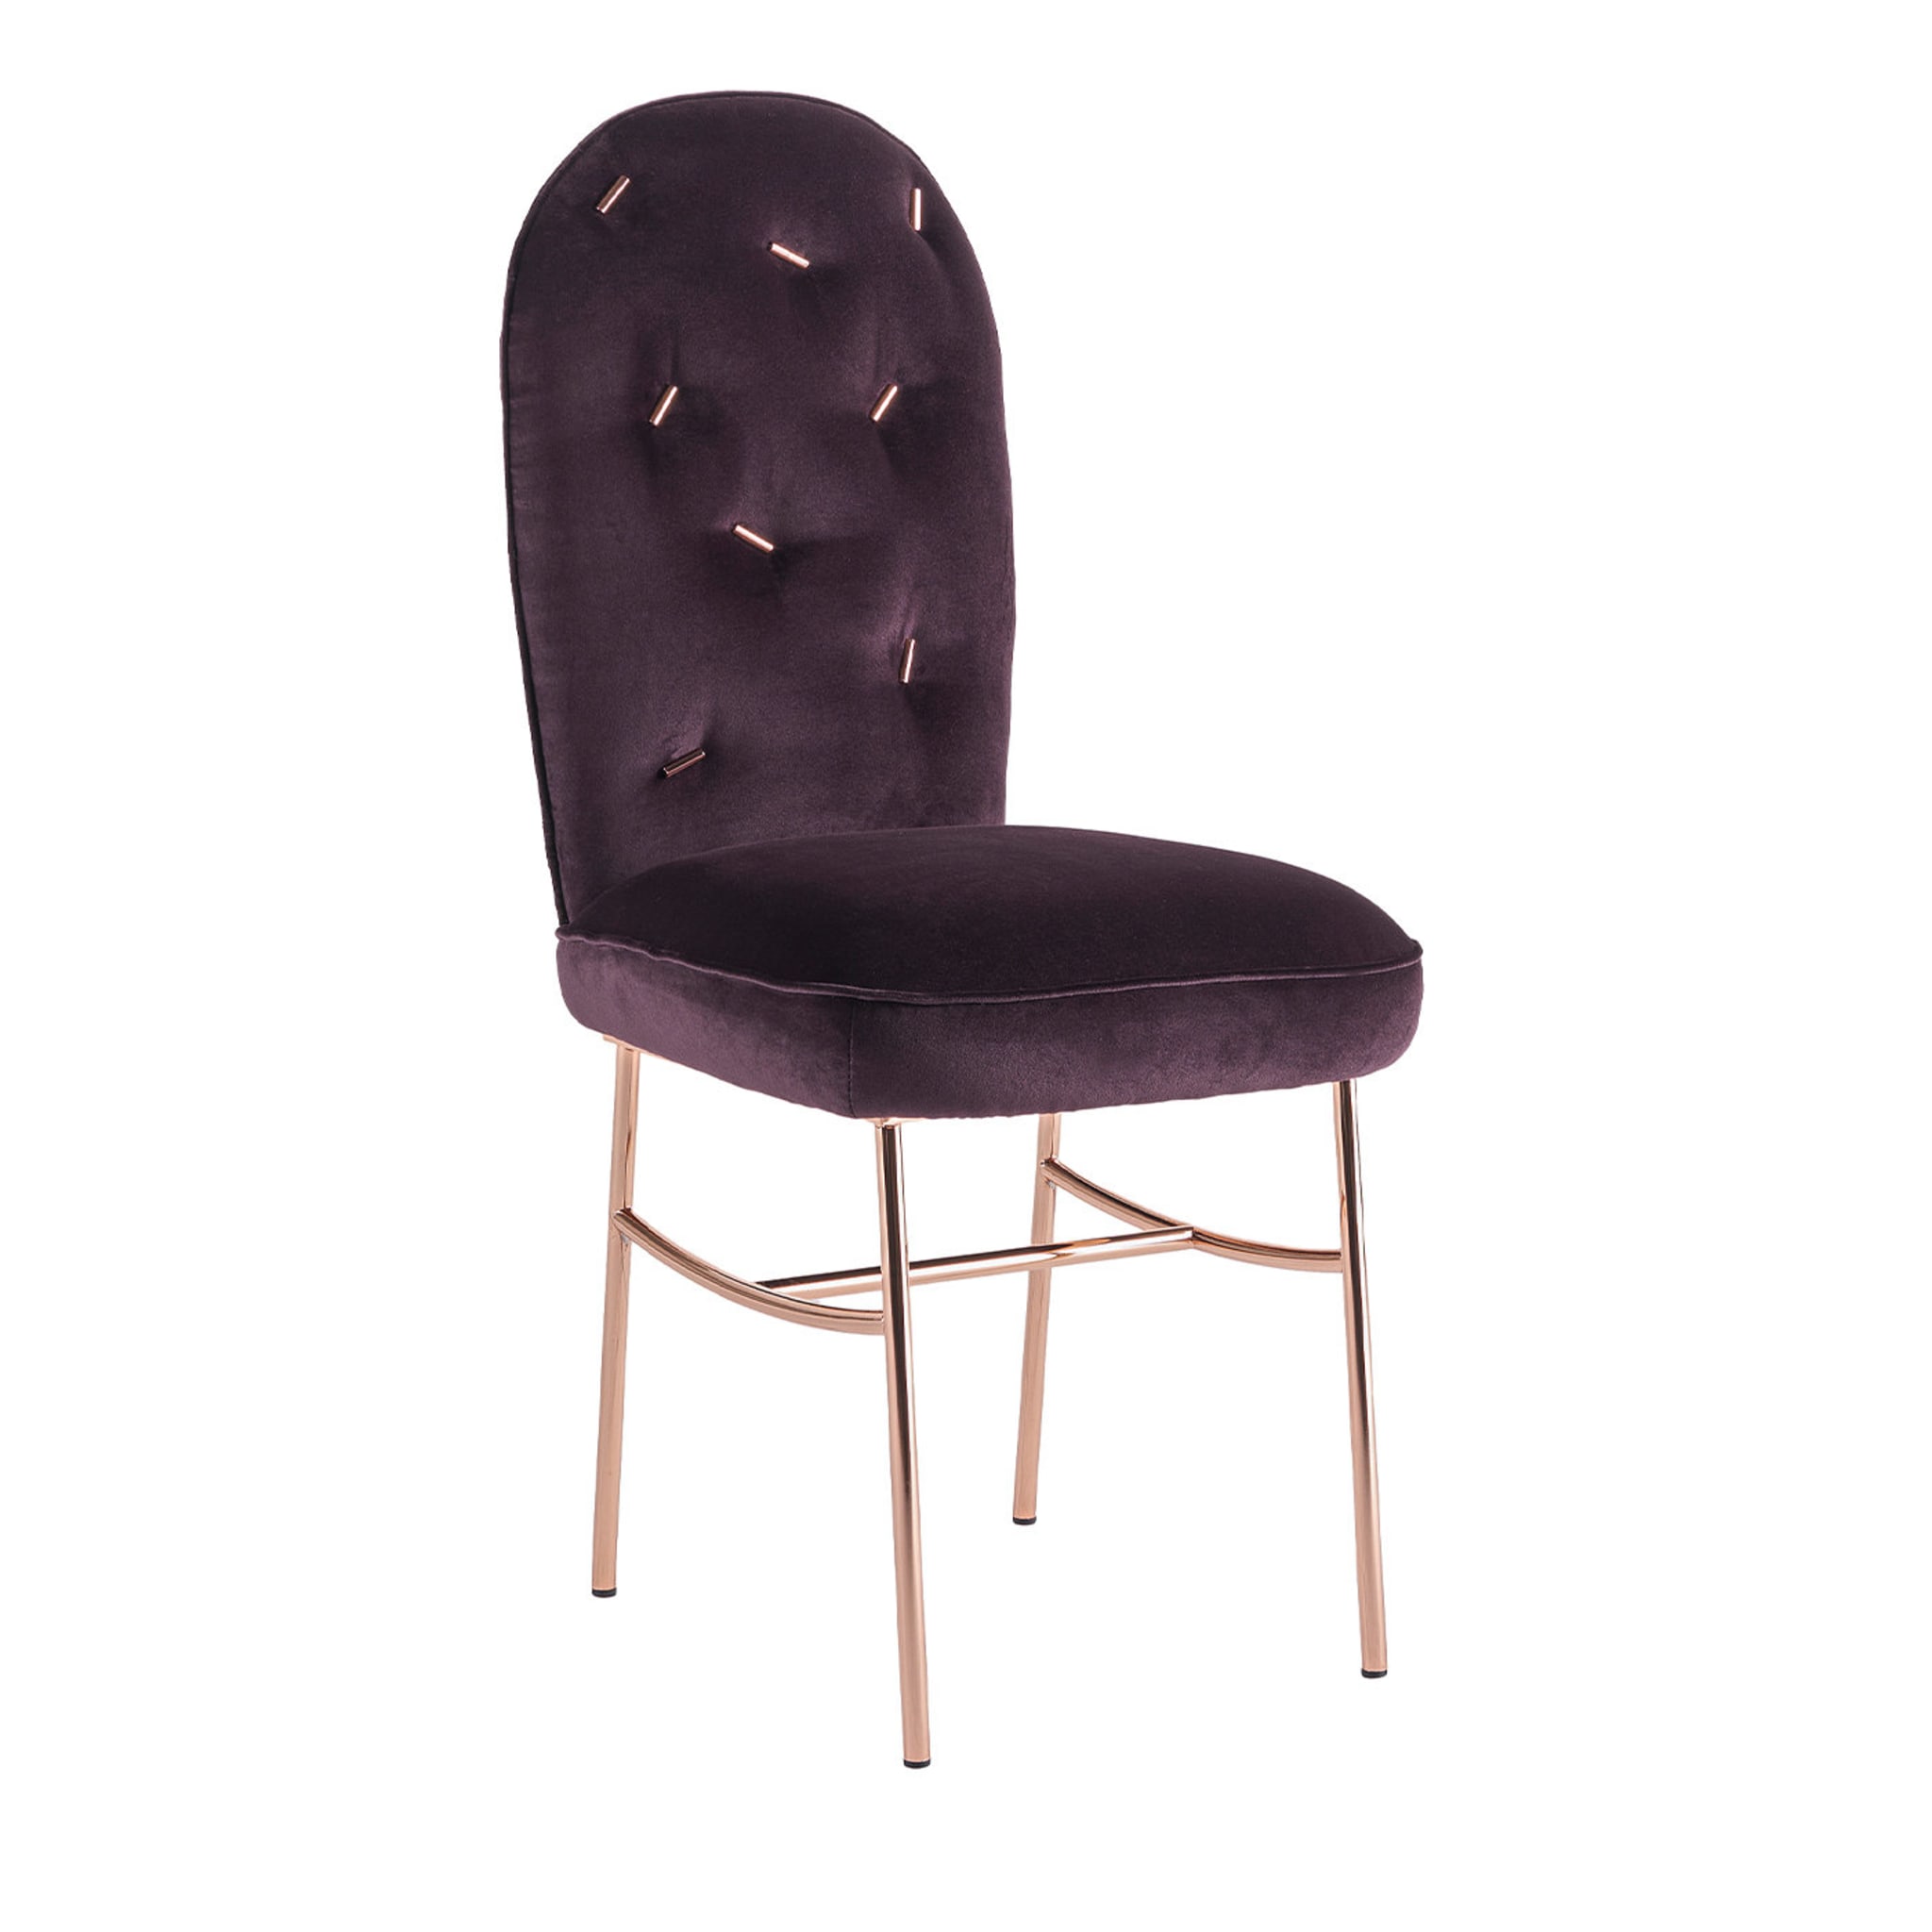 Ttemic Dark Purple Chair by Matteo Cibic - Main view